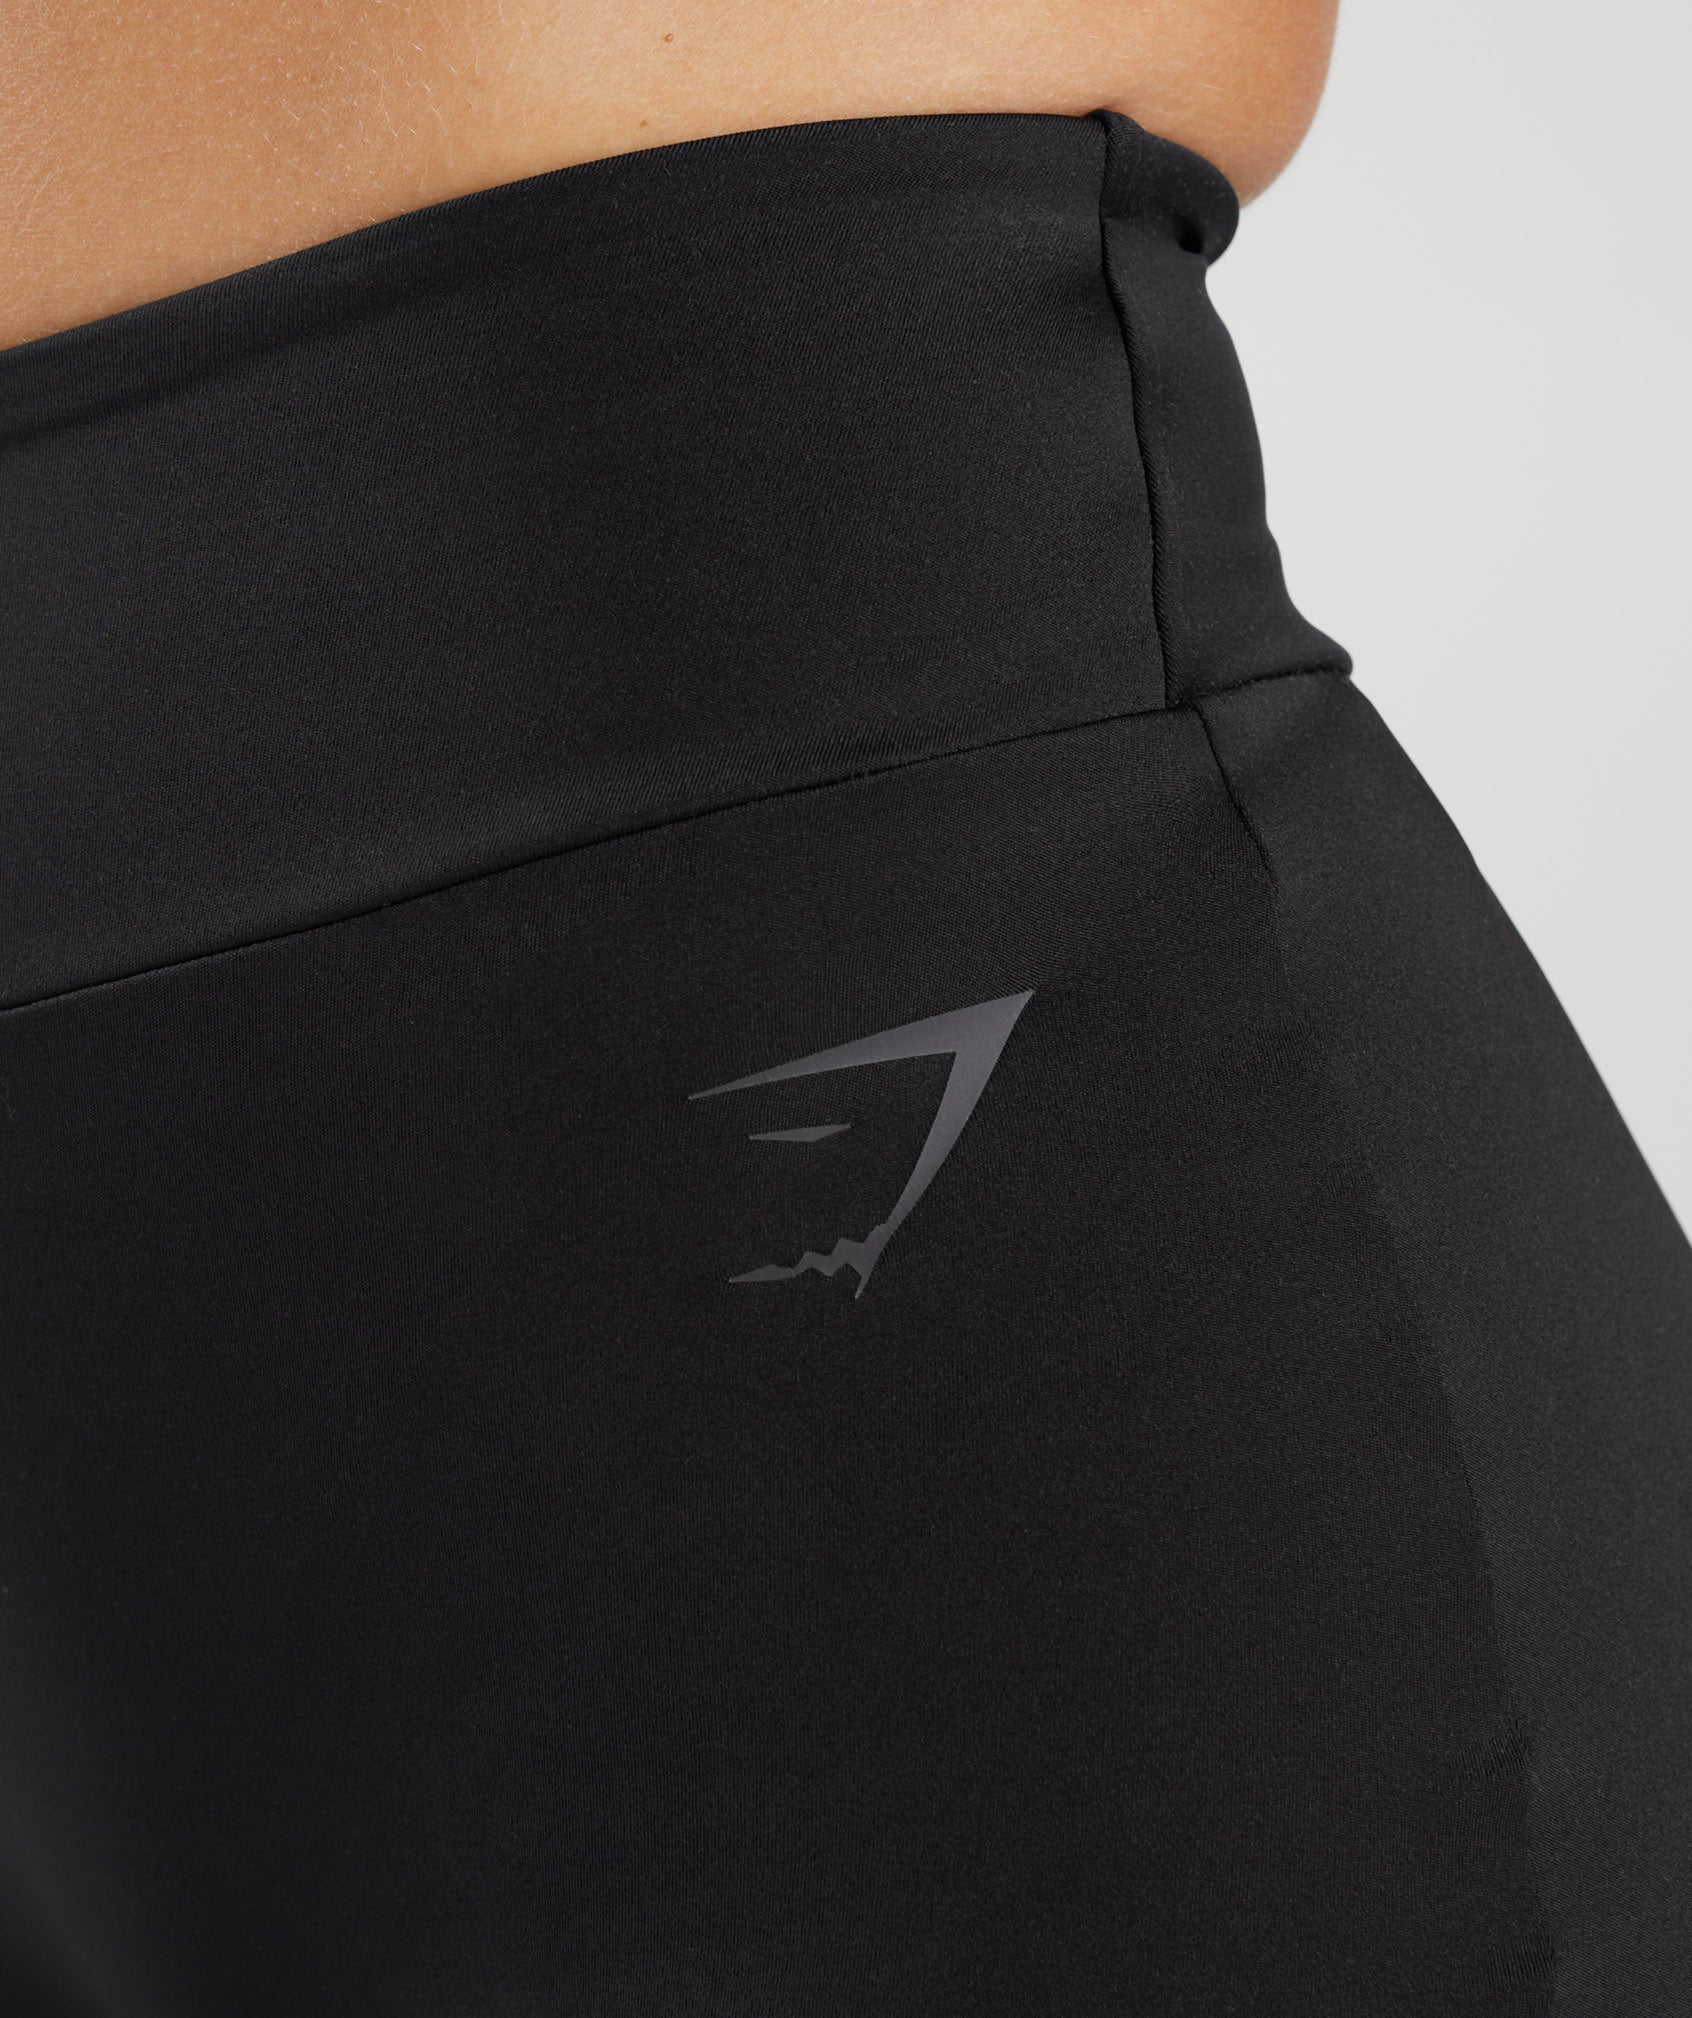 GS Power Original Tight Shorts in Black